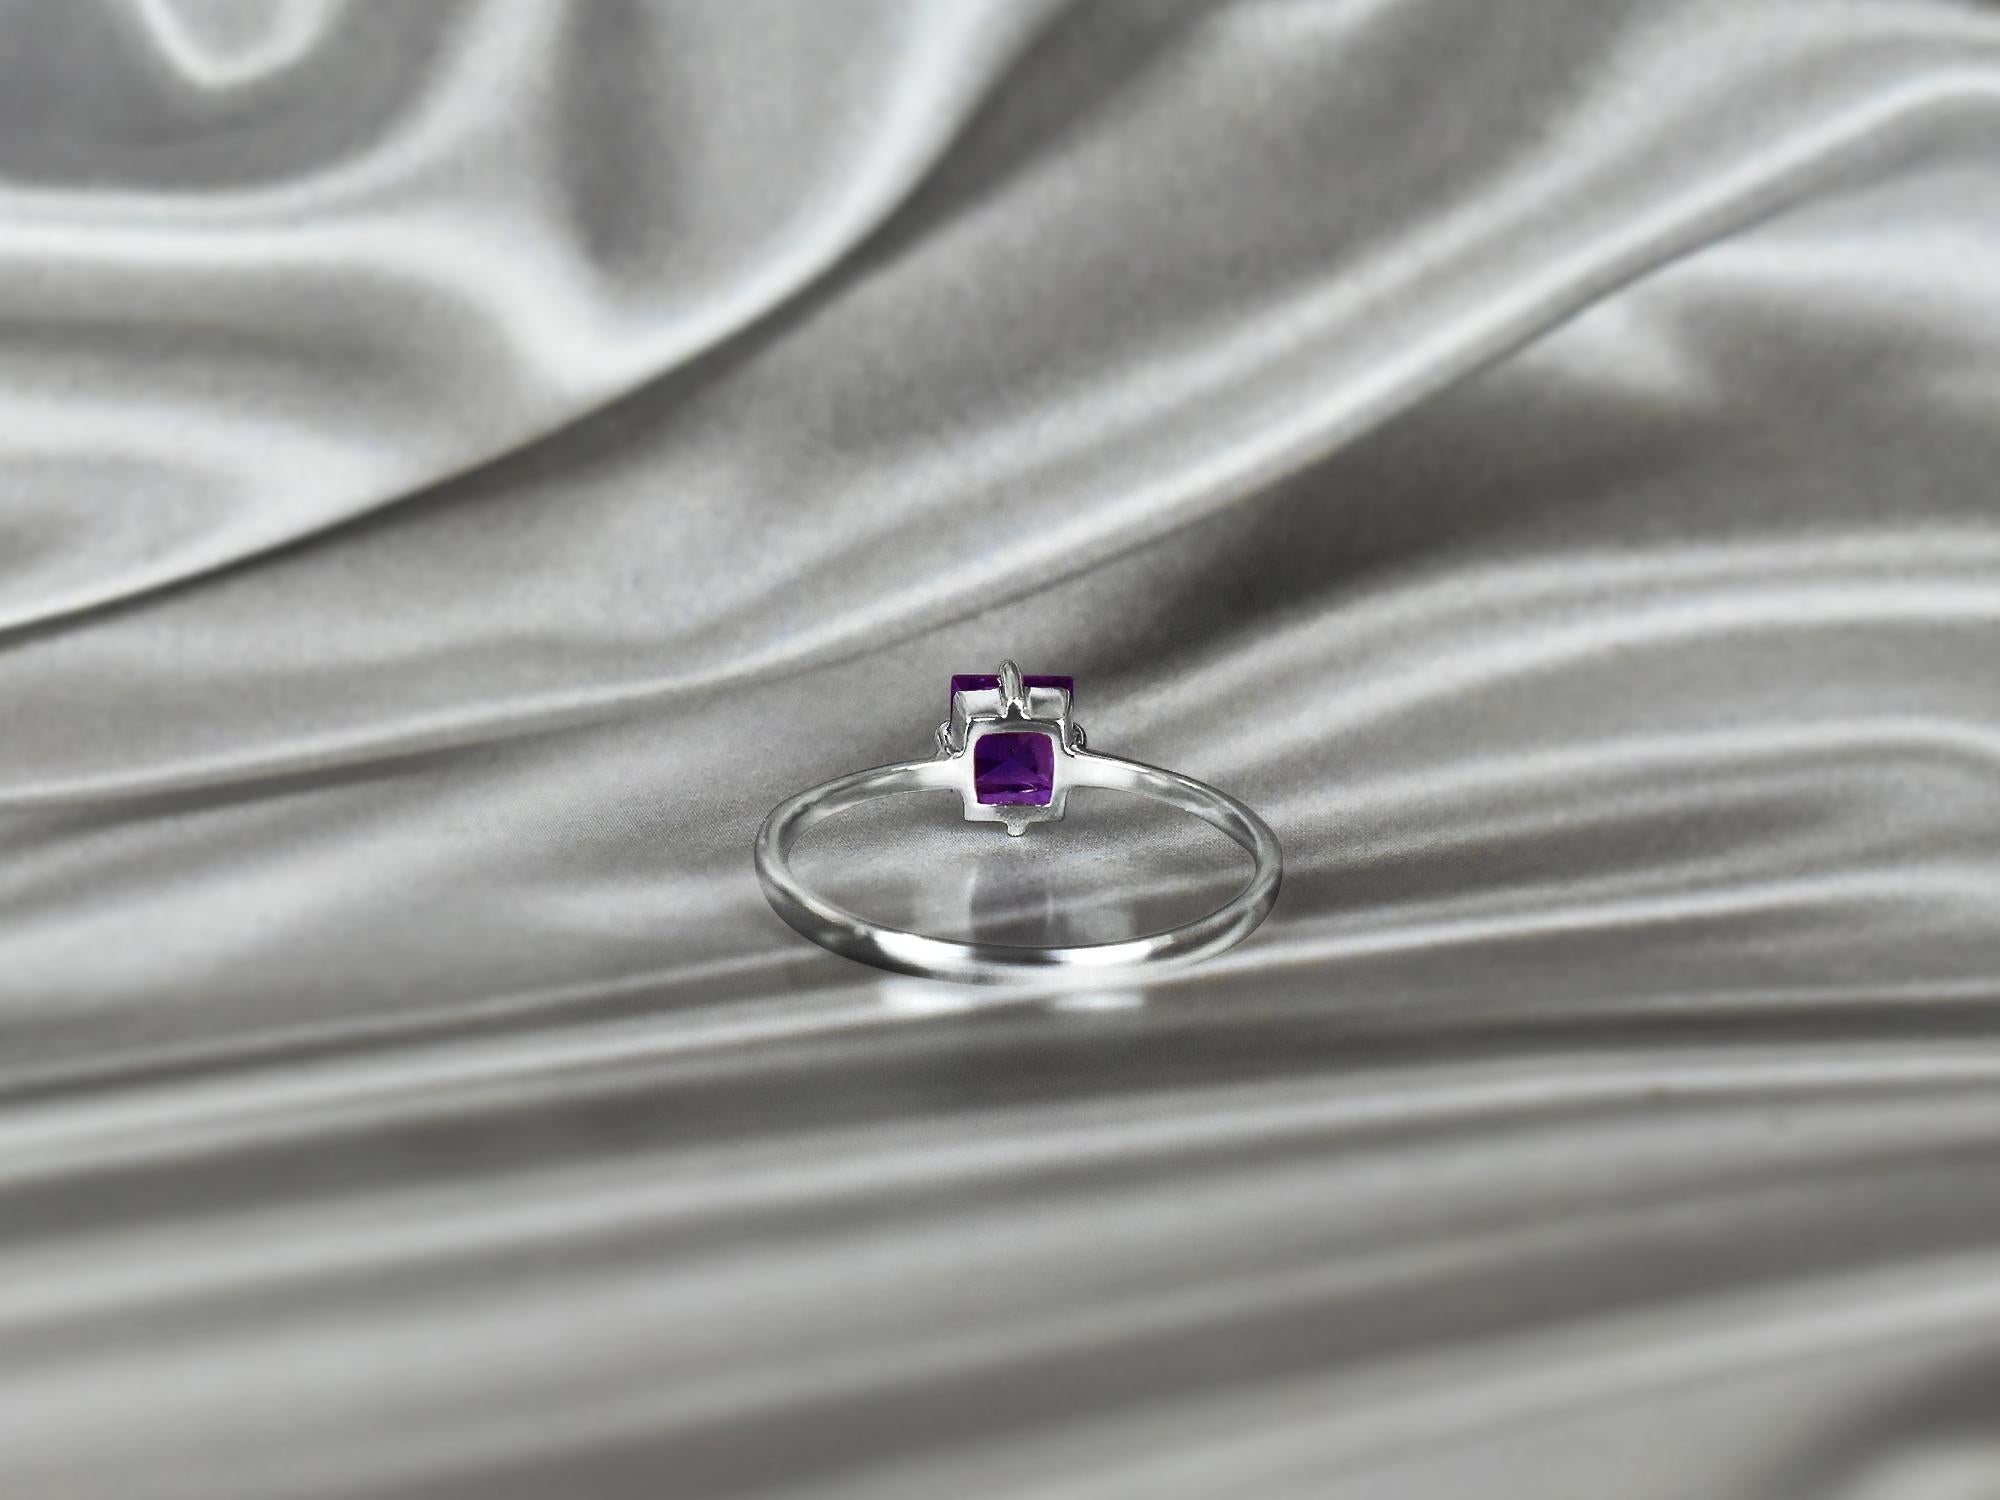 For Sale:  14k Gold Princess Cut 5x5 mm Princess Cut Gemstone Ring Gemstone Engagement Ring 11